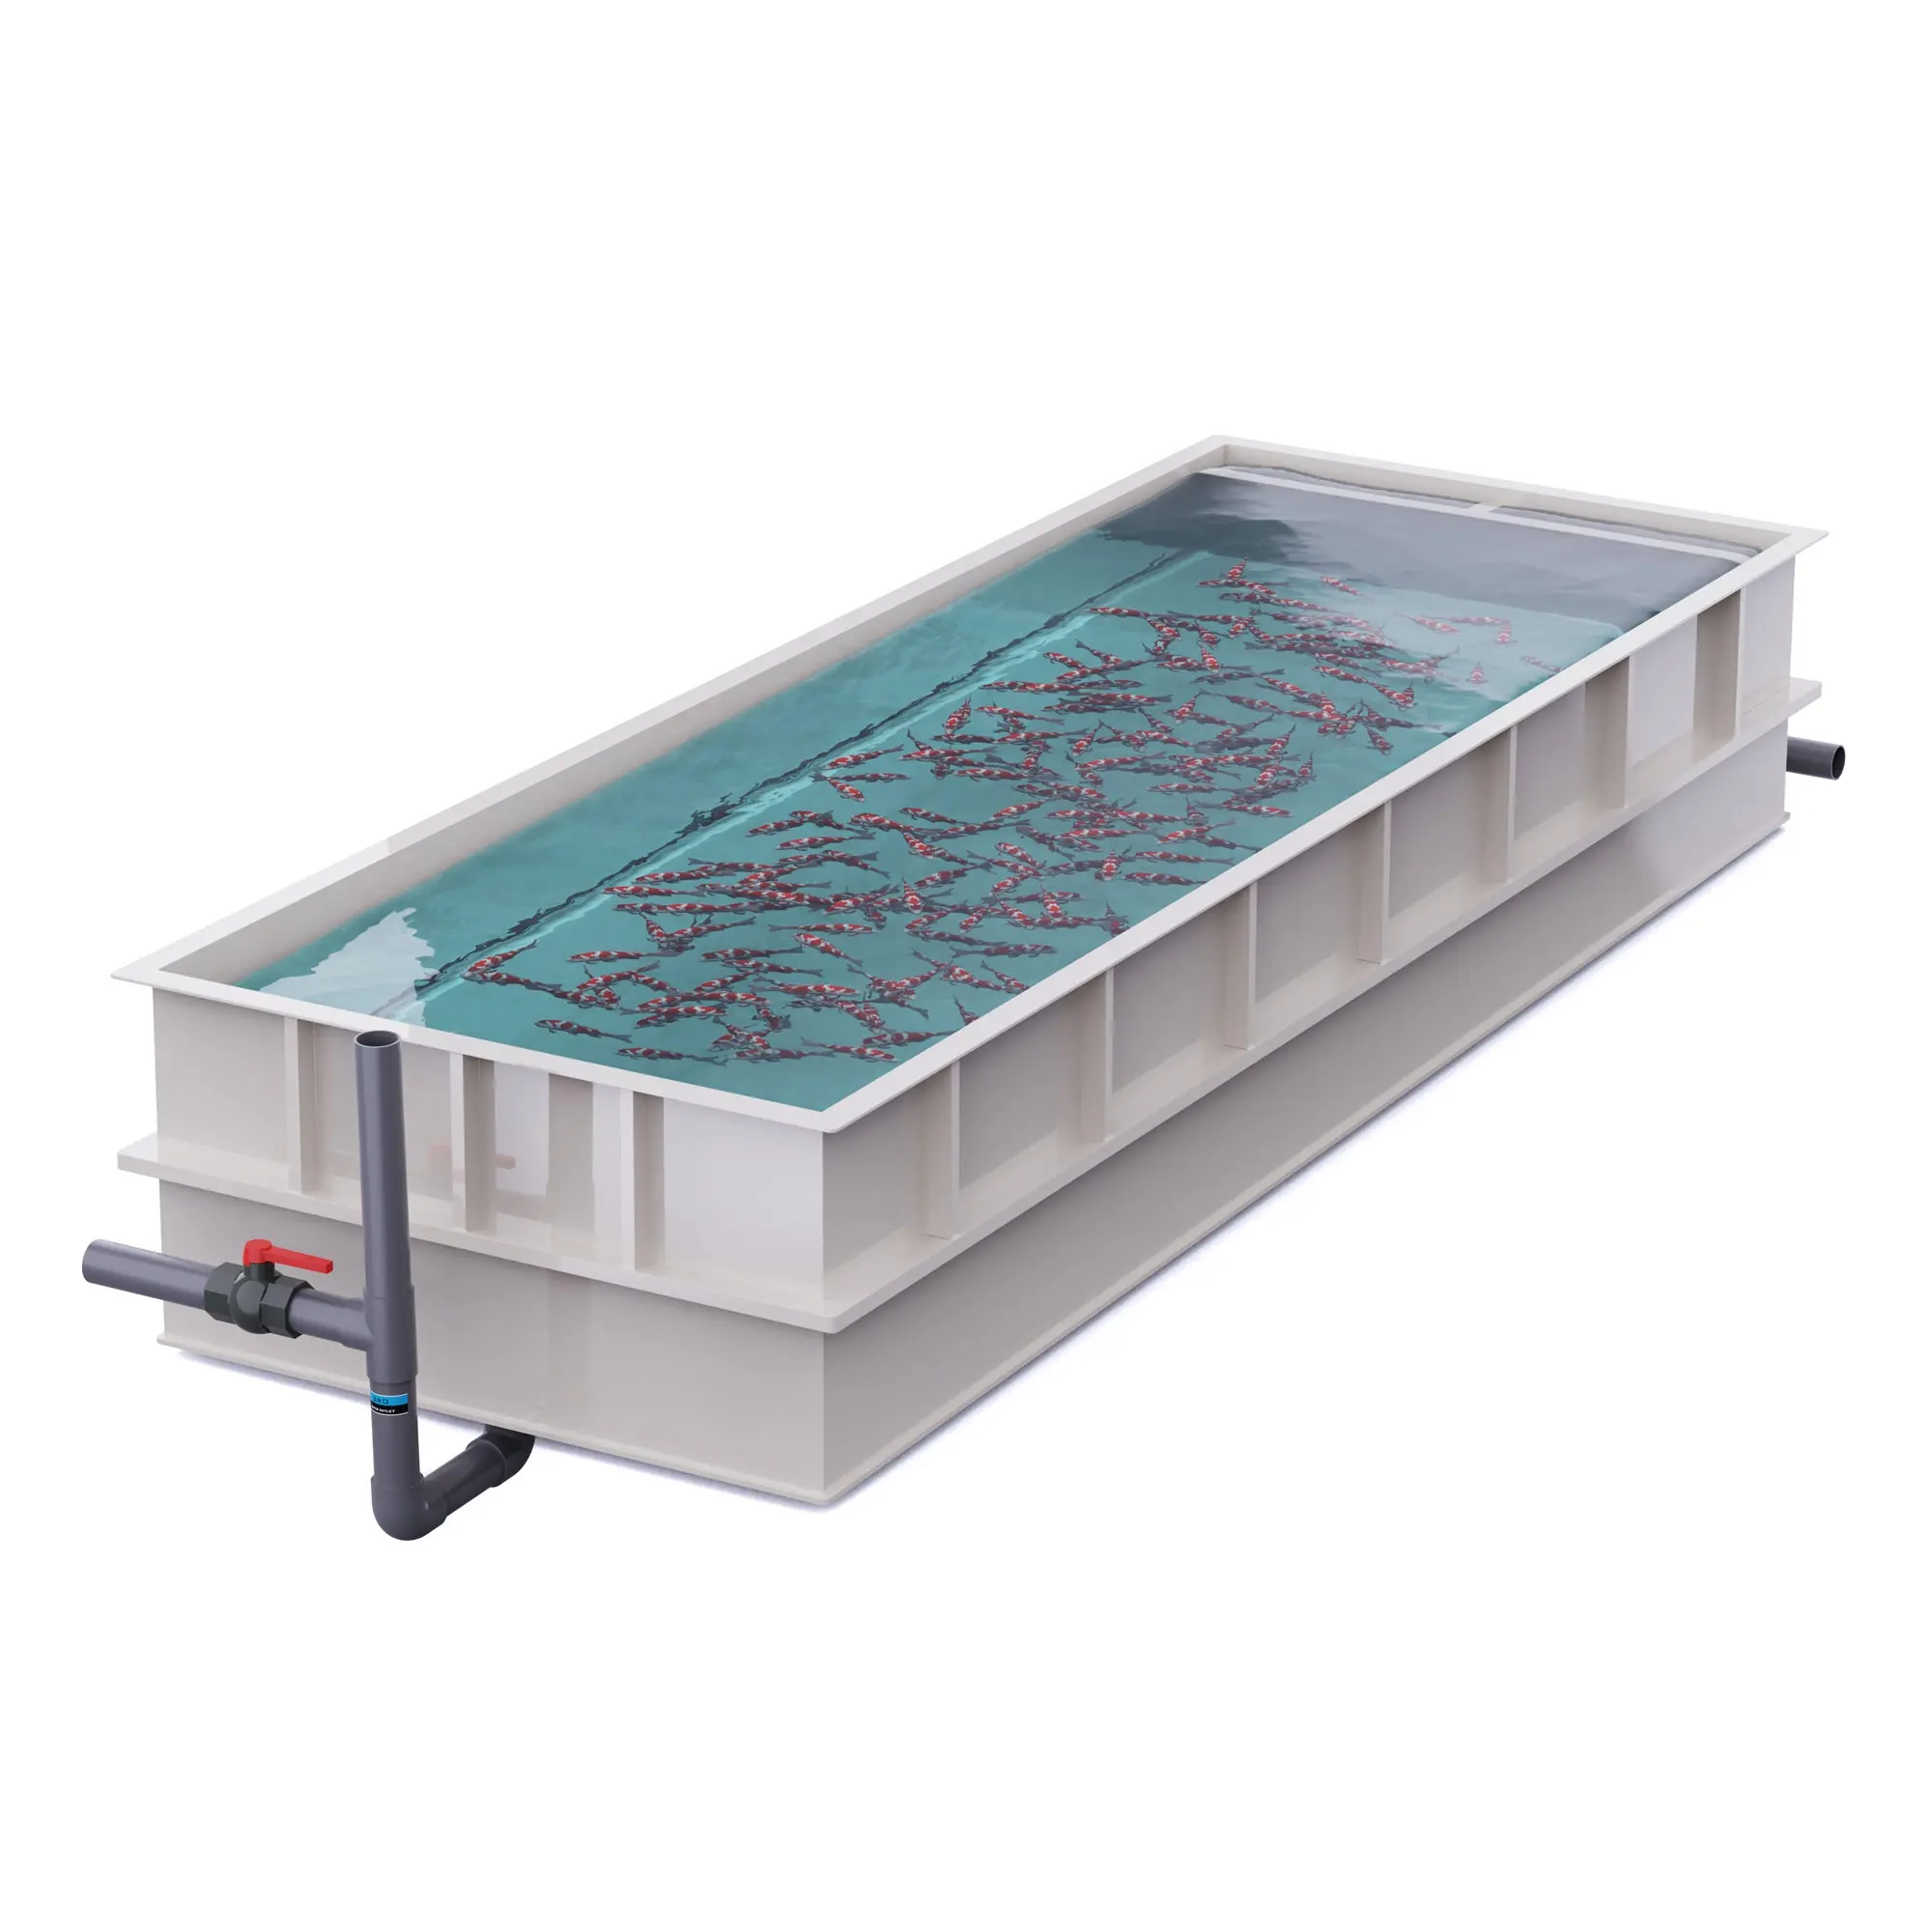 New Design Aquaculture Shrimp Ras Pond Square Nursery Tanks Fish Tank With Manufacture Price